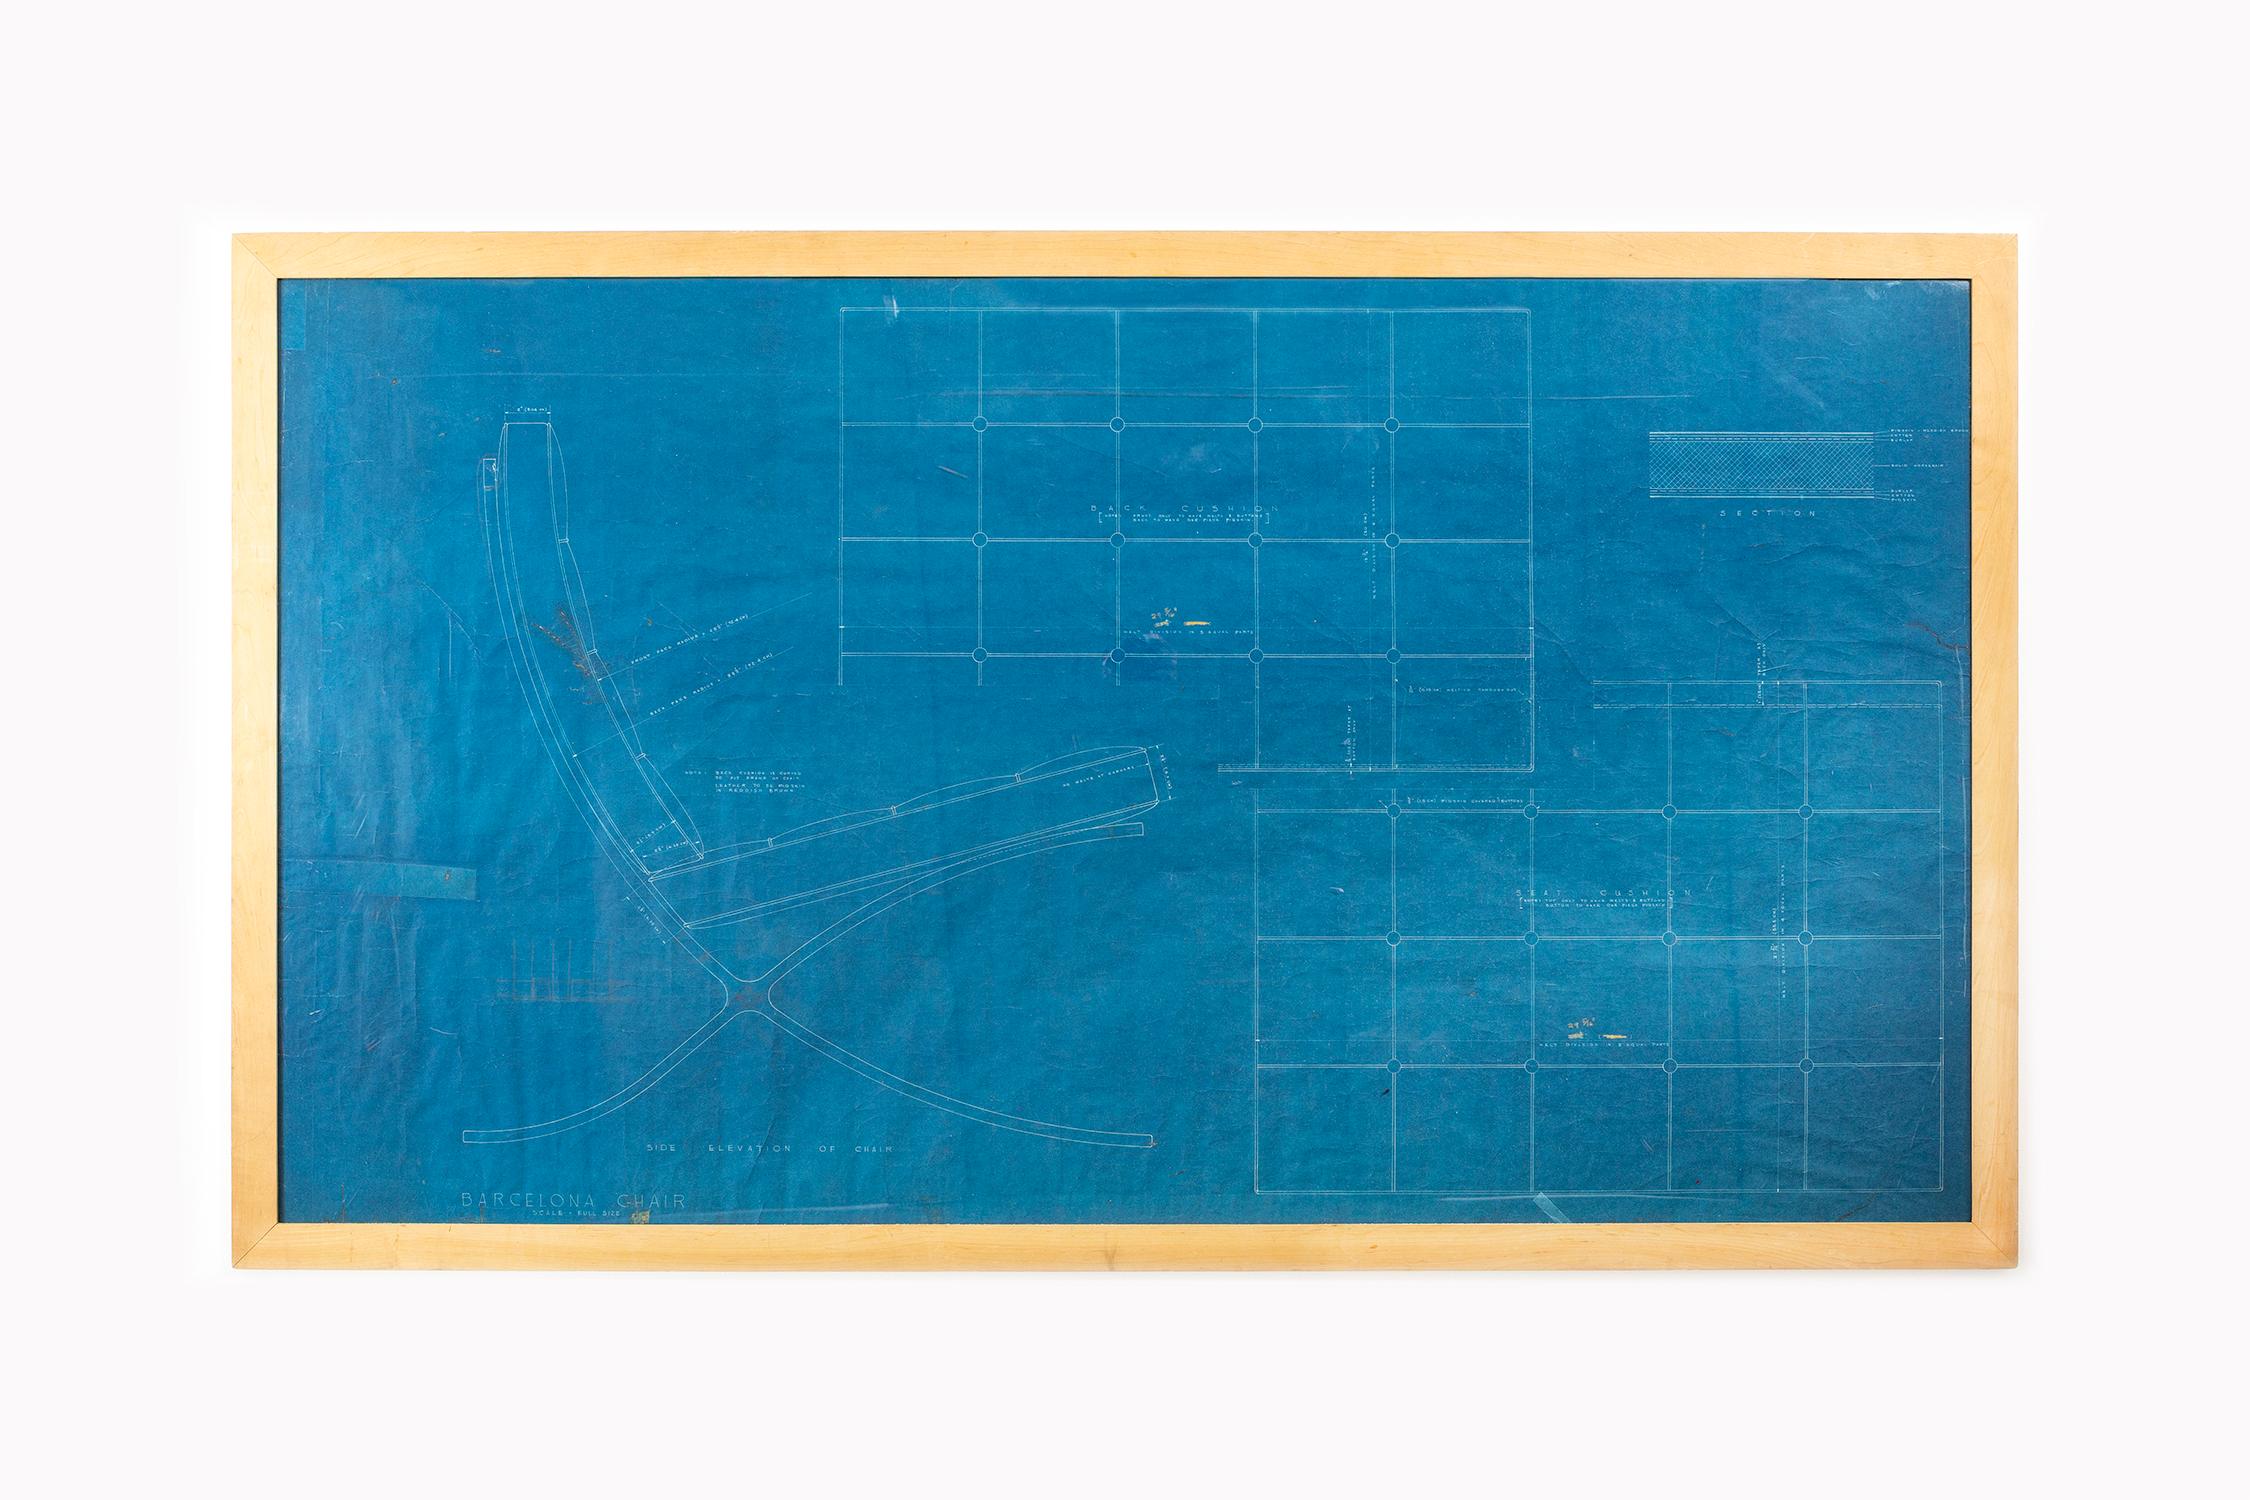 Mies van der Rohe Blueprint, One Illinois Center 111 E. Wacker Chicago, 1968 For Sale 1